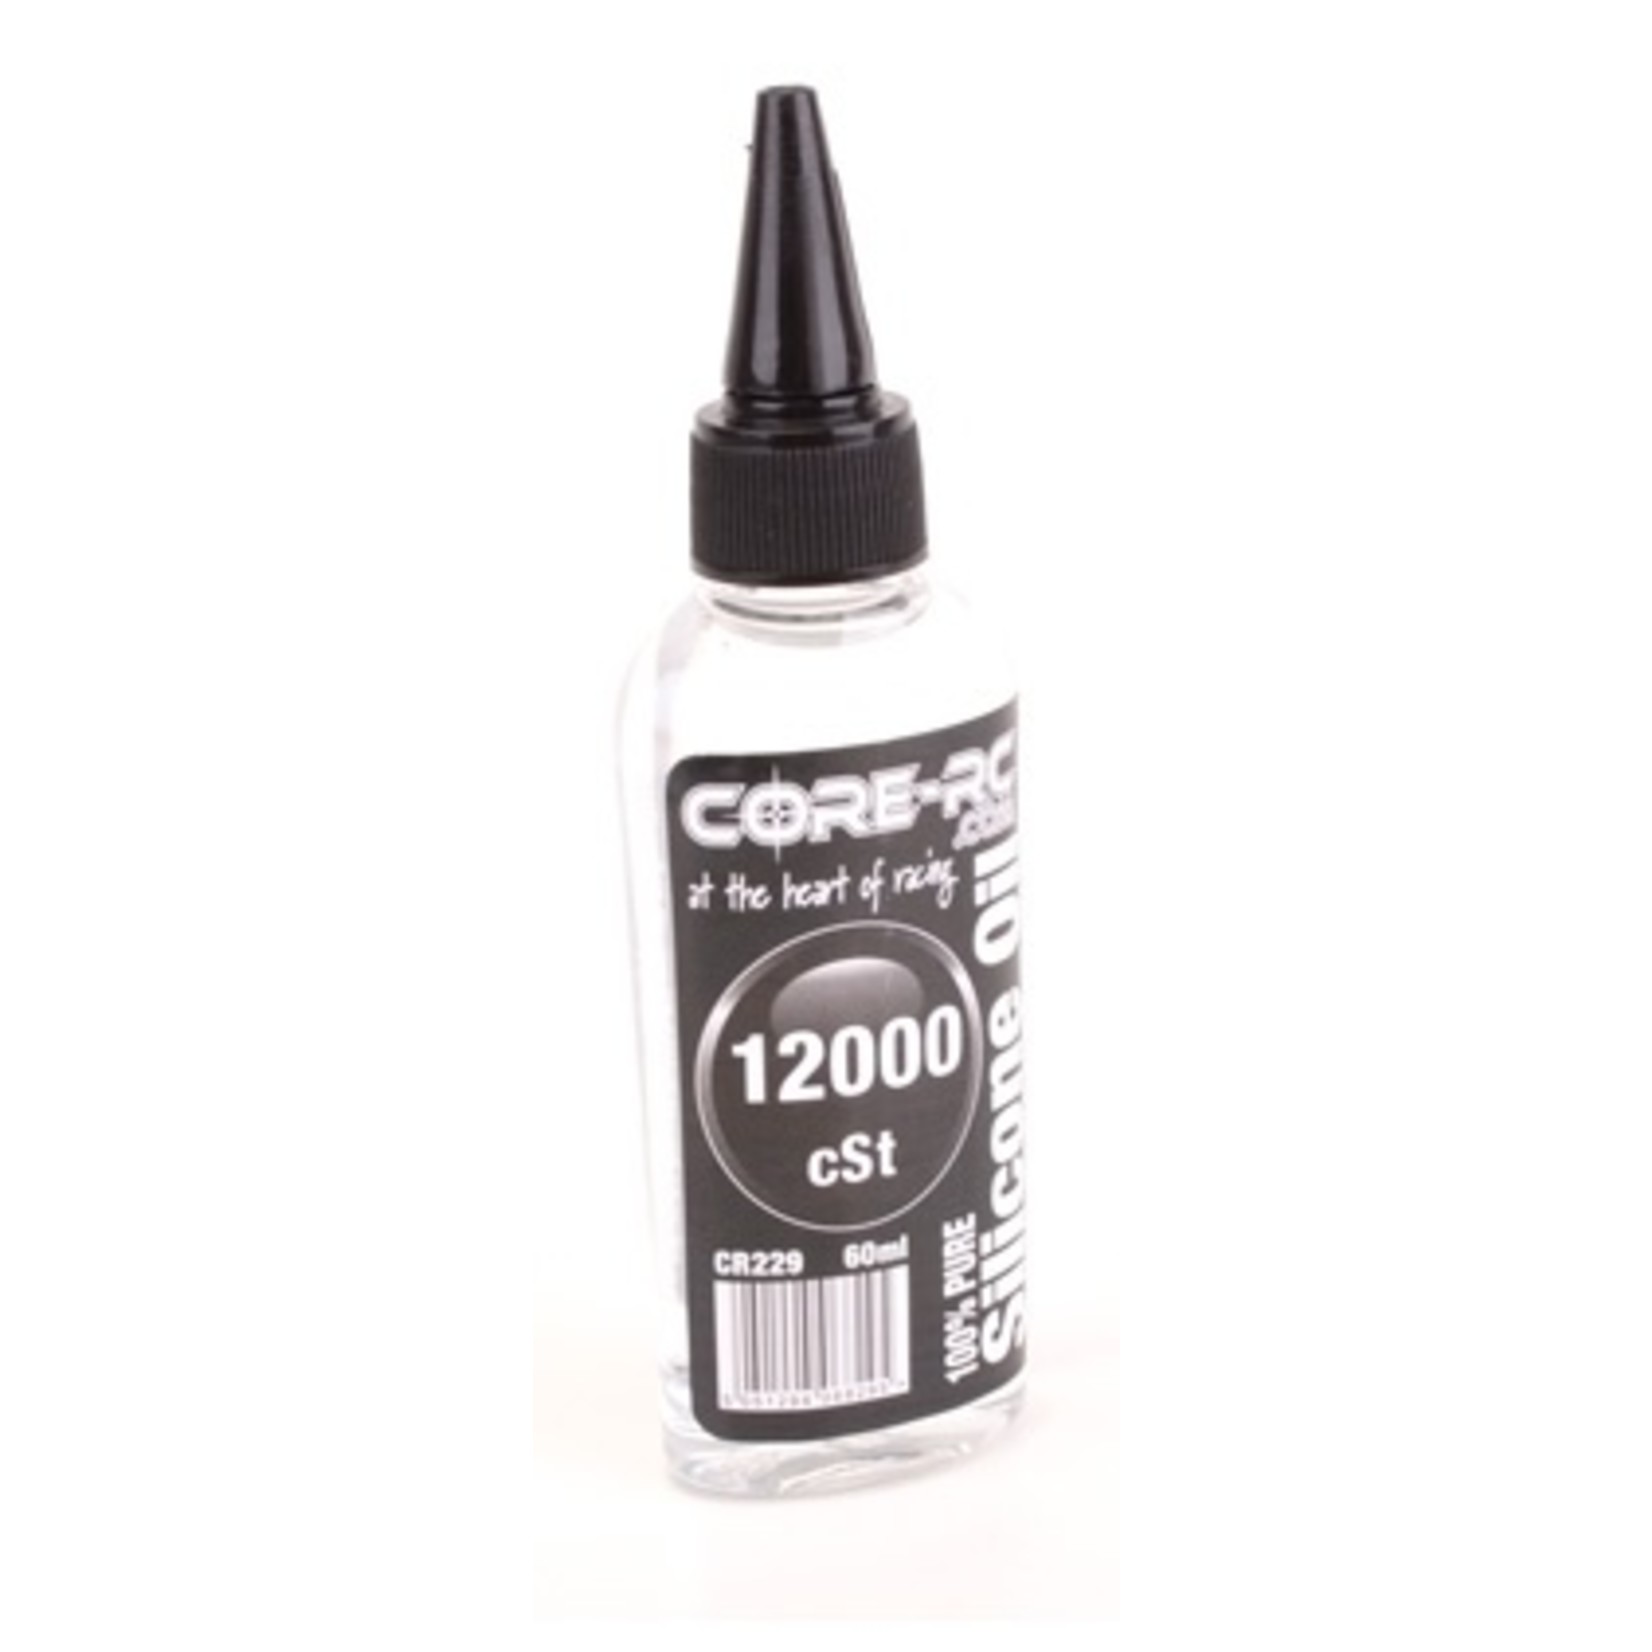 Core RC CORE RC Silicone Oil - 12000cSt - 60ml